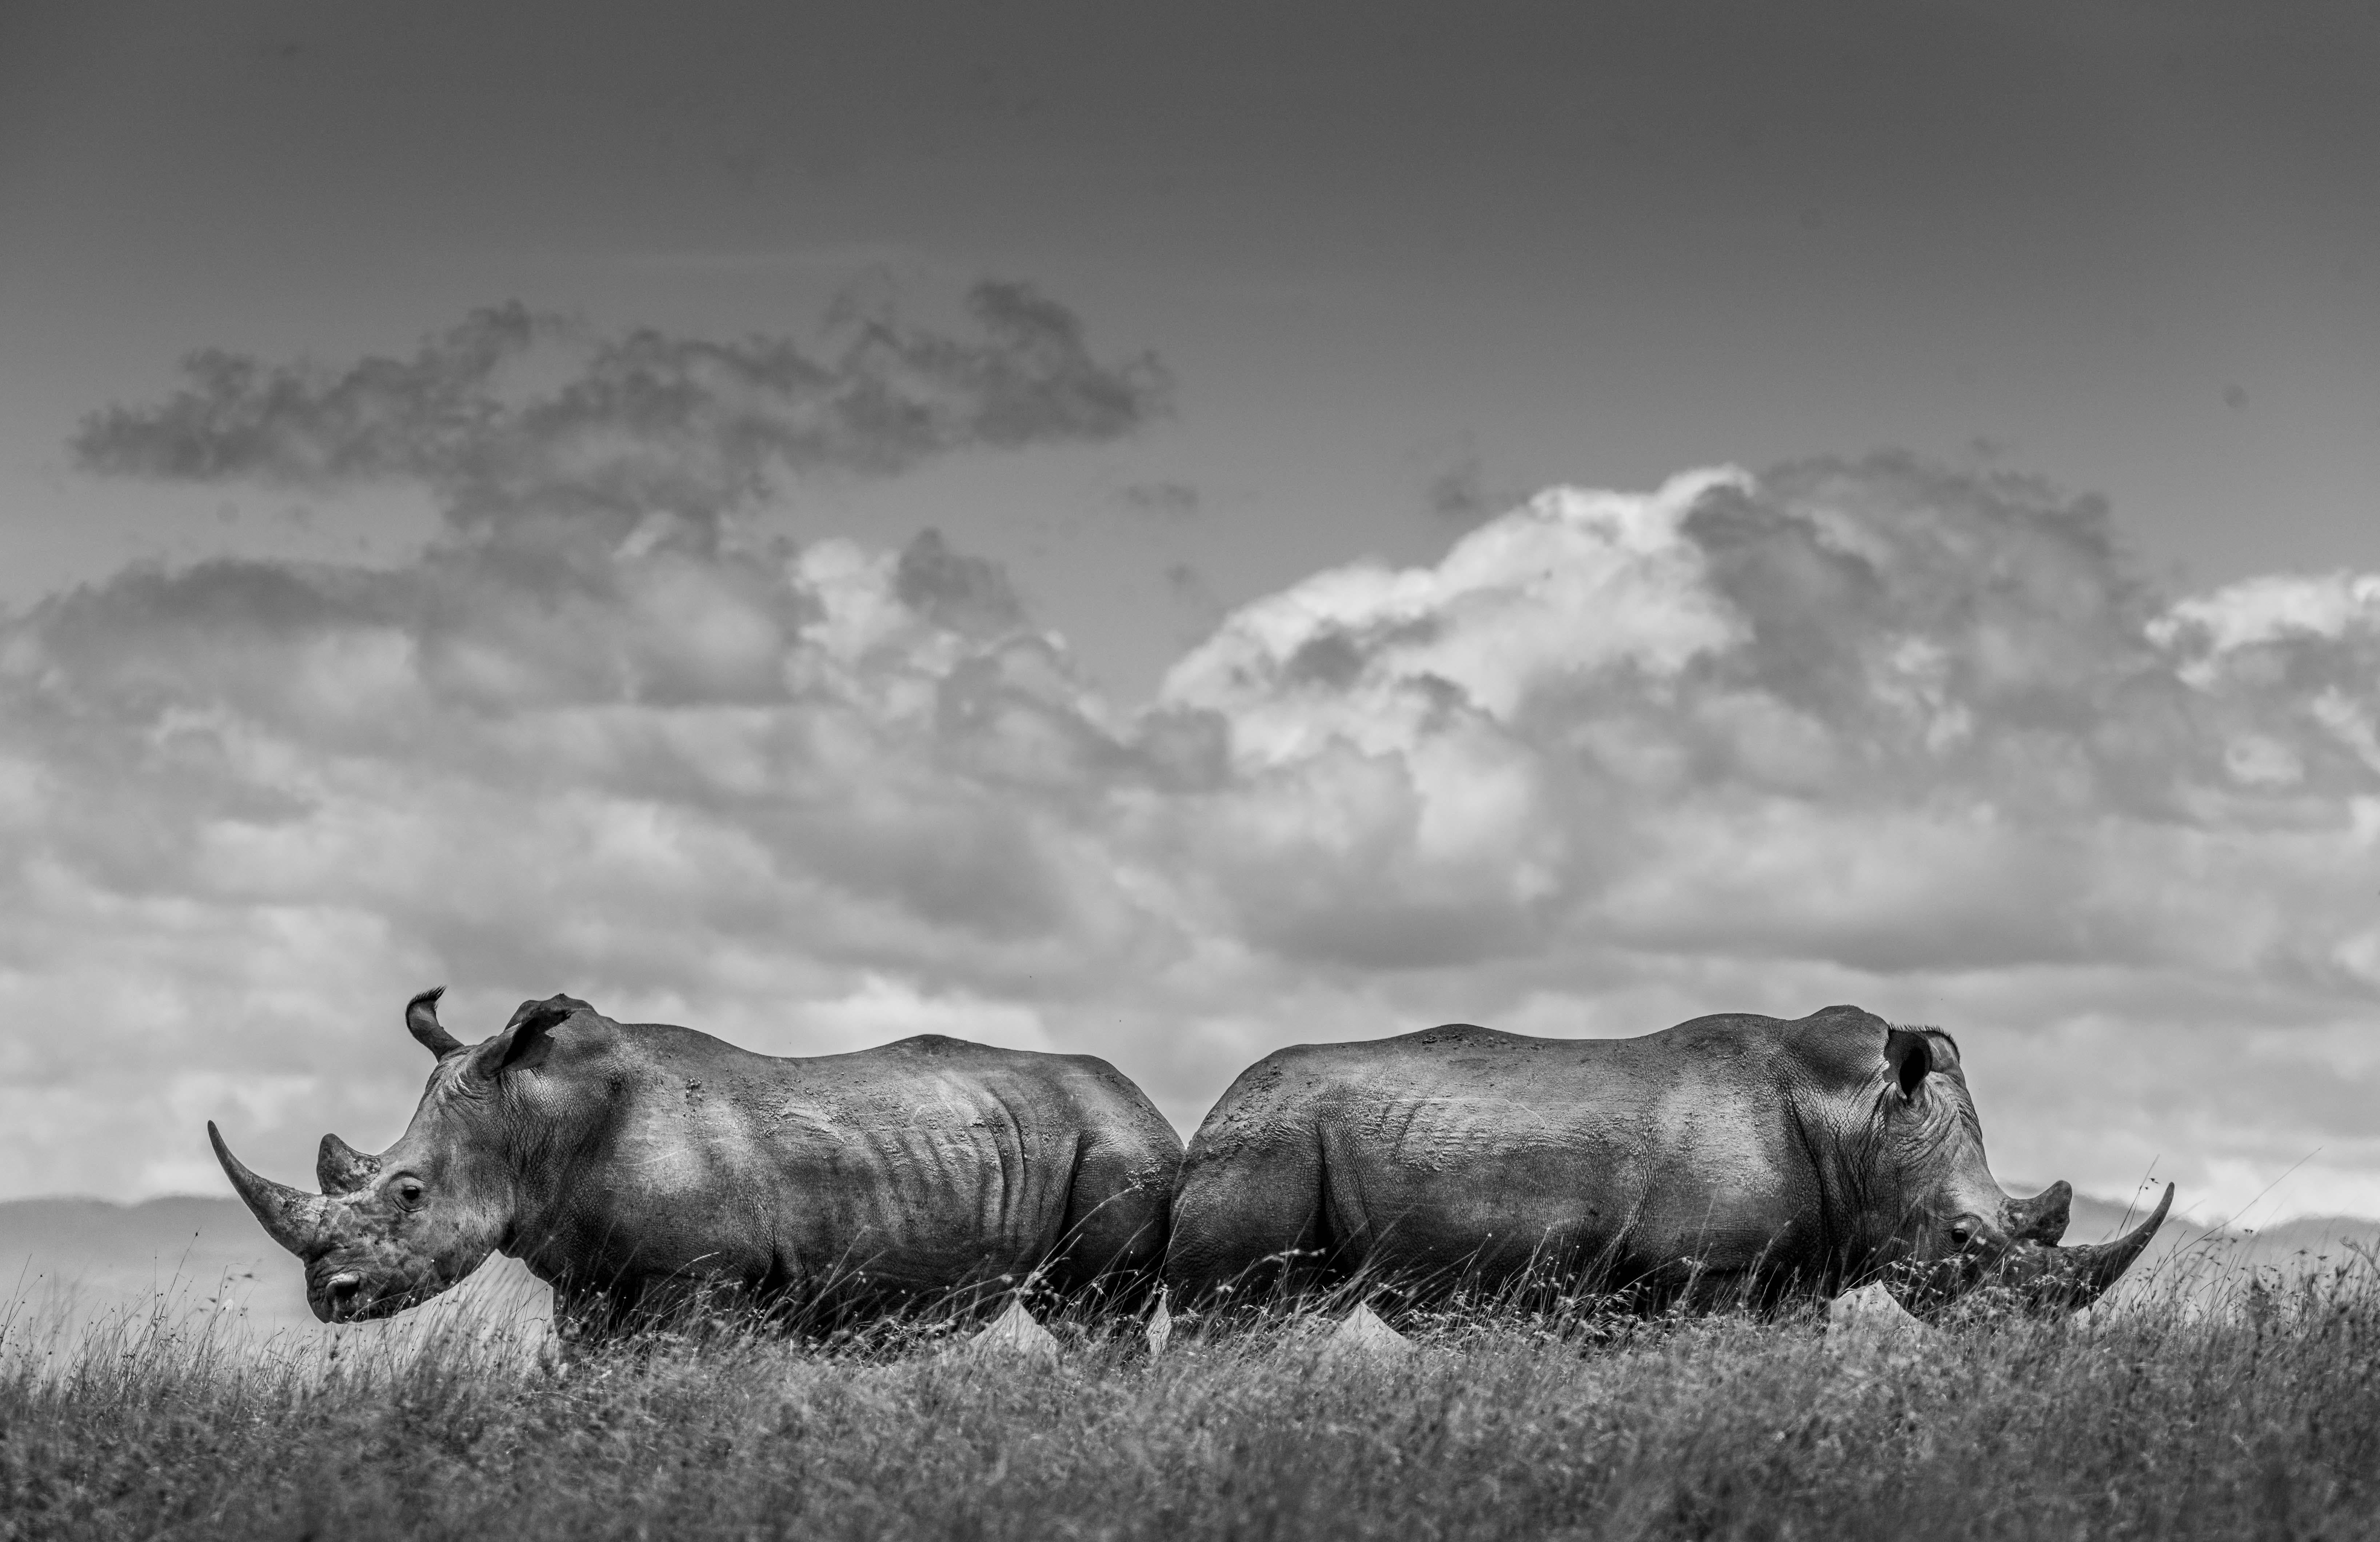 James Lewin – Rückseite hinten, Borana, Kenia, Fotografie 2019, gedruckt nach